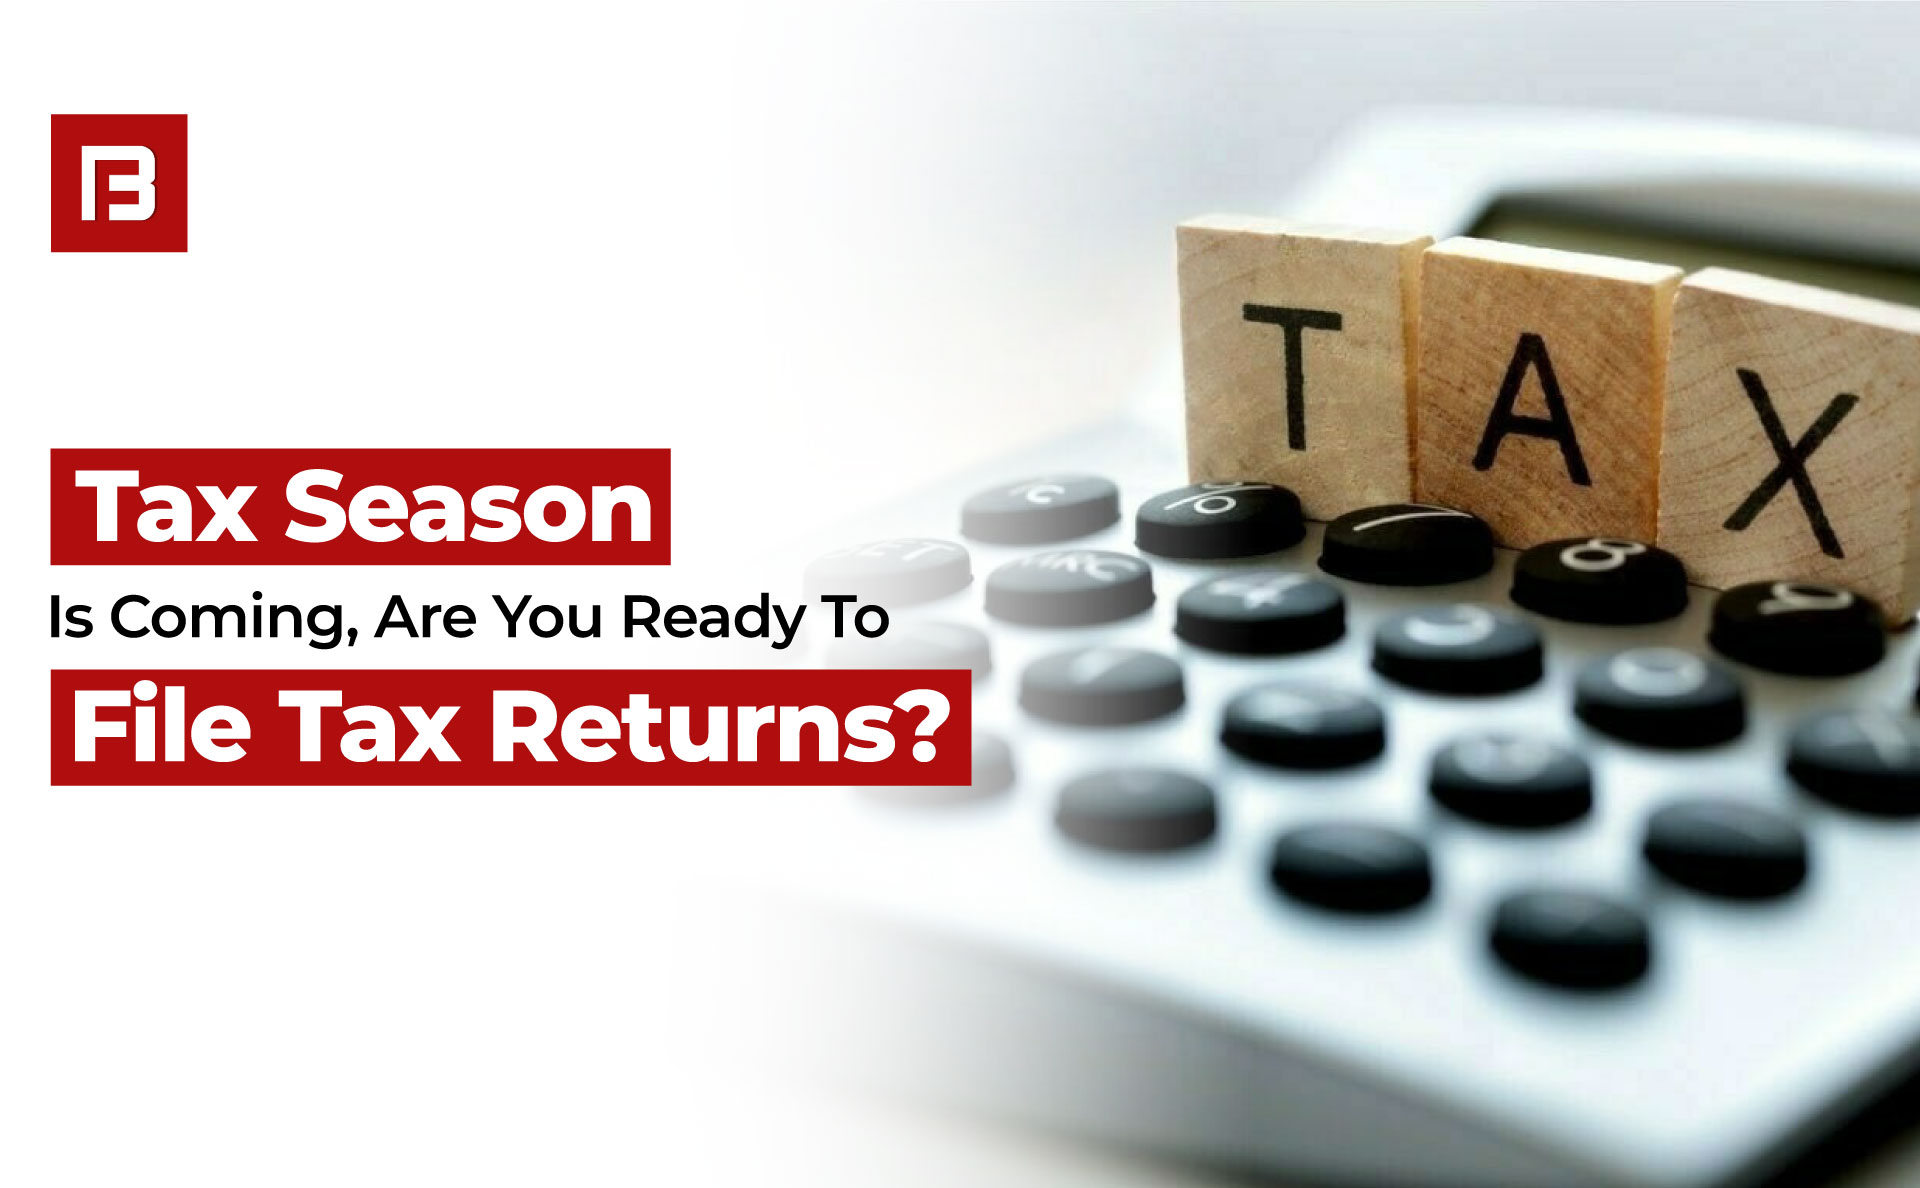 Tax Season Is Coming, Are You Ready, Pakistani Tax Filers?